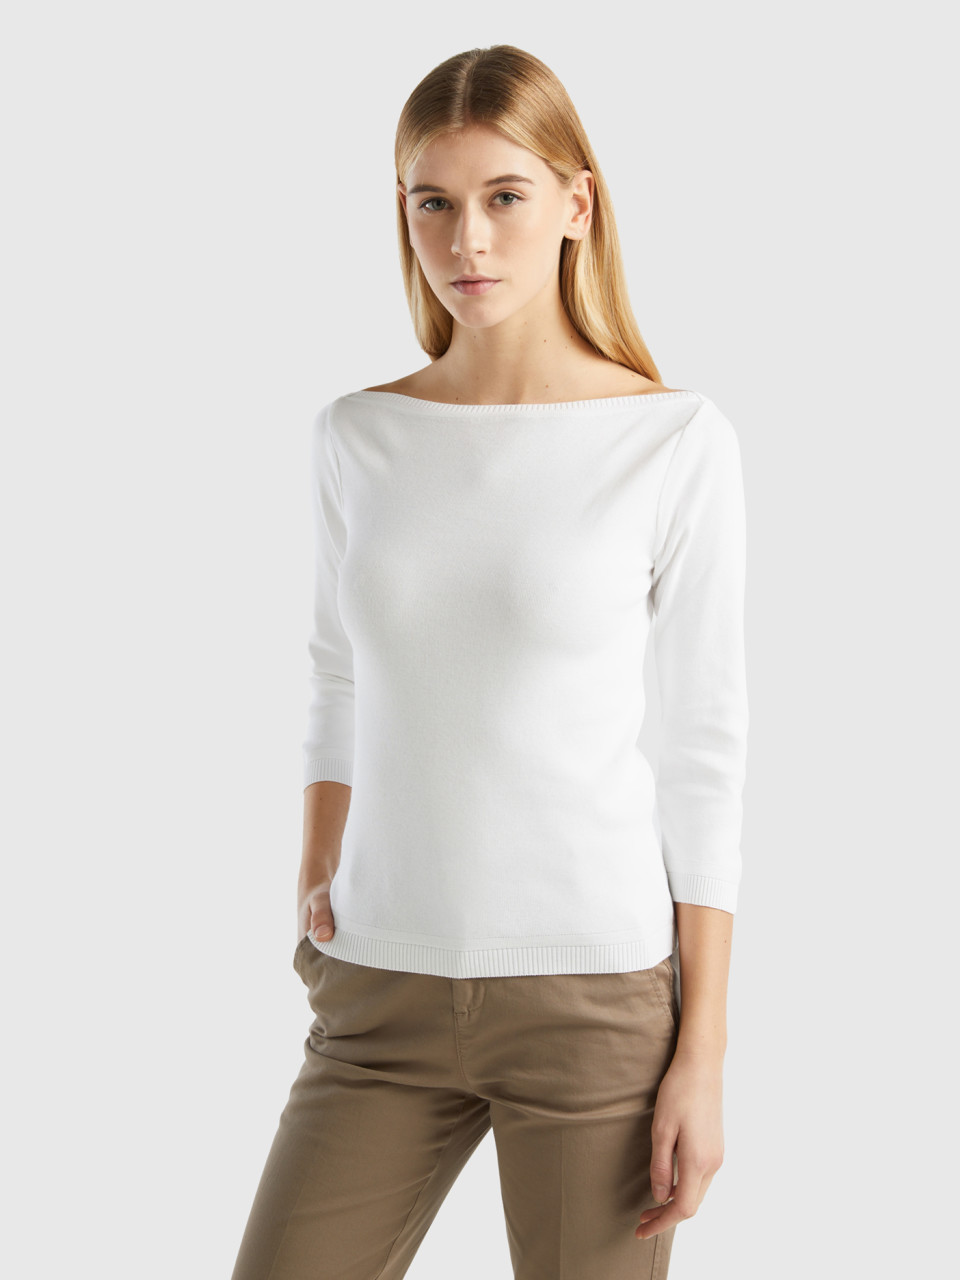 Benetton Online exclusive, 100% Cotton Boat Neck Sweater, White, Women